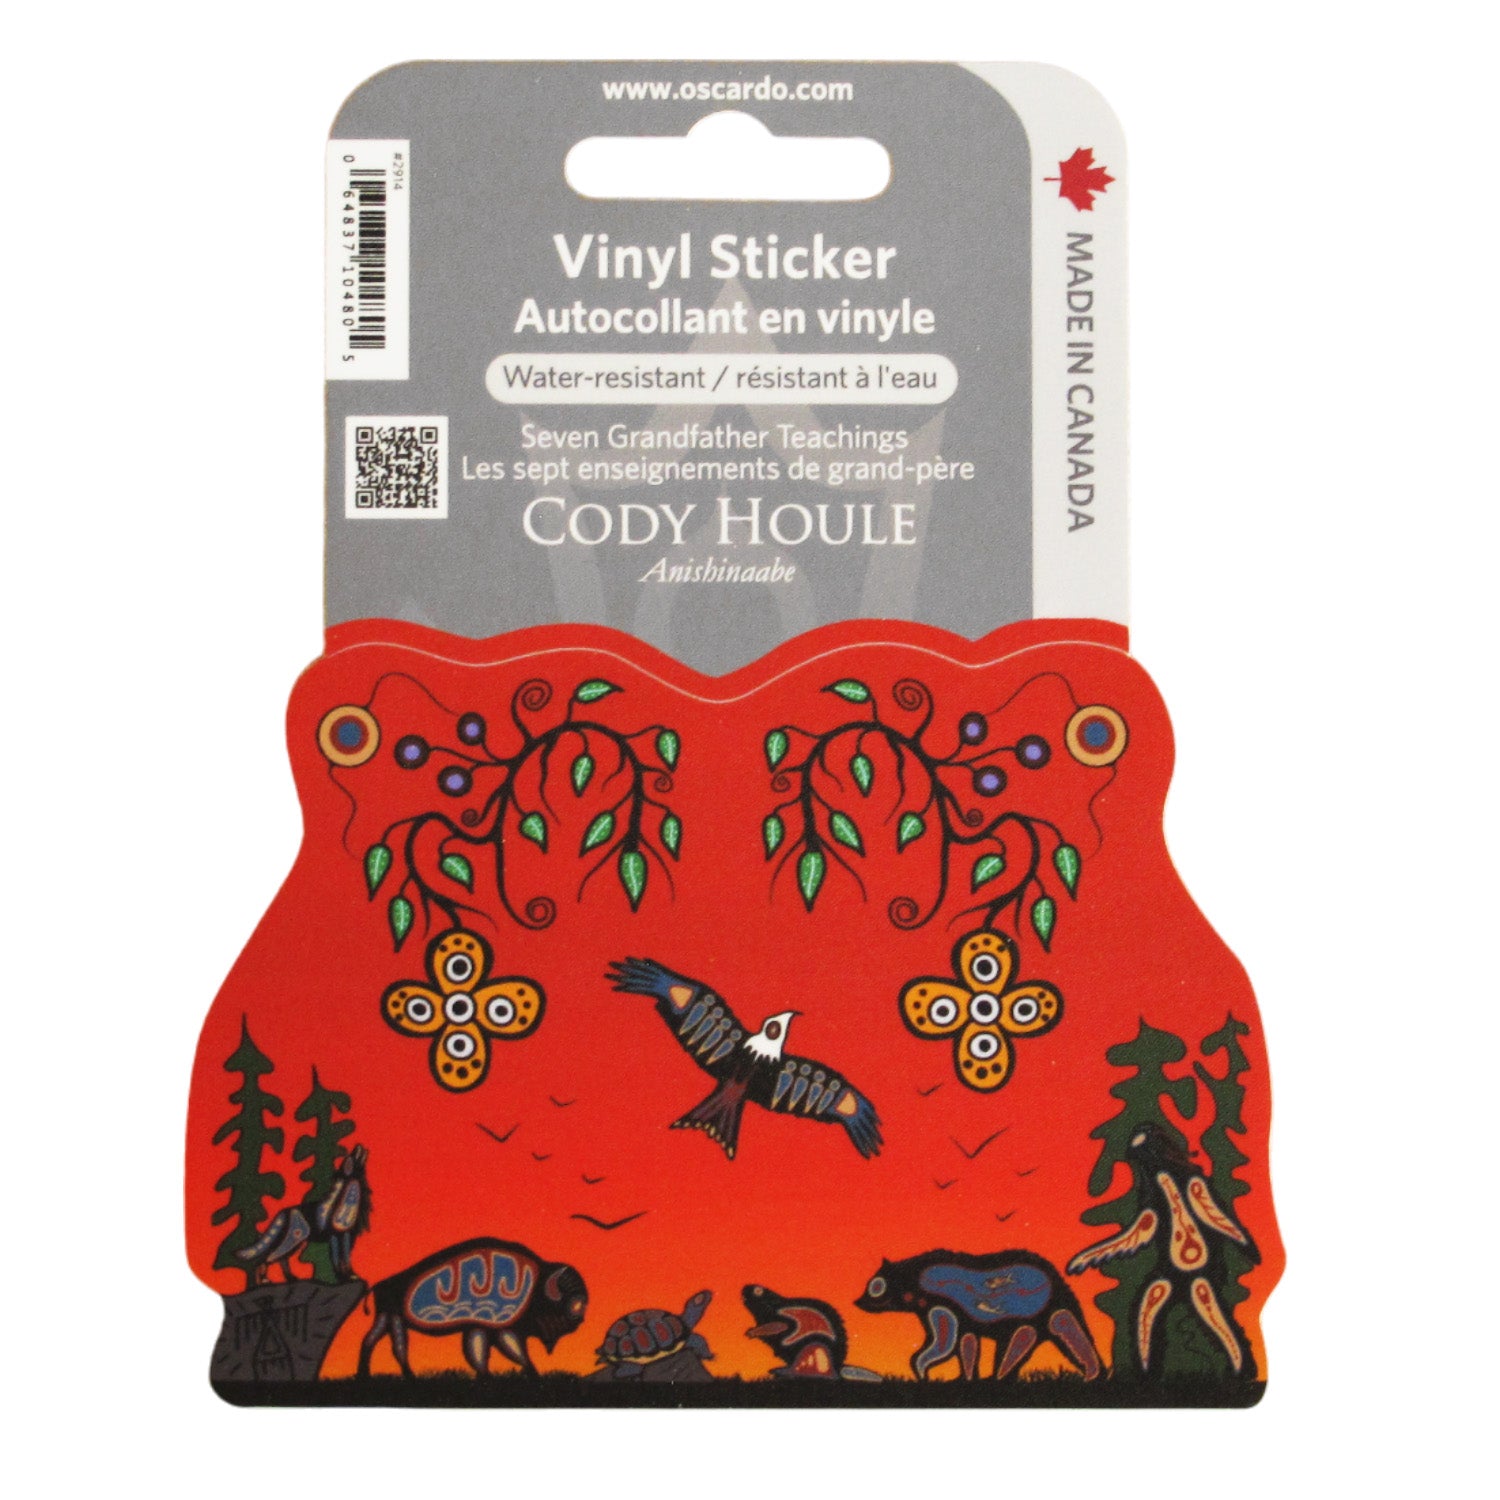 Cody Houle Seven Grandfather Teachings Vinyl Sticker